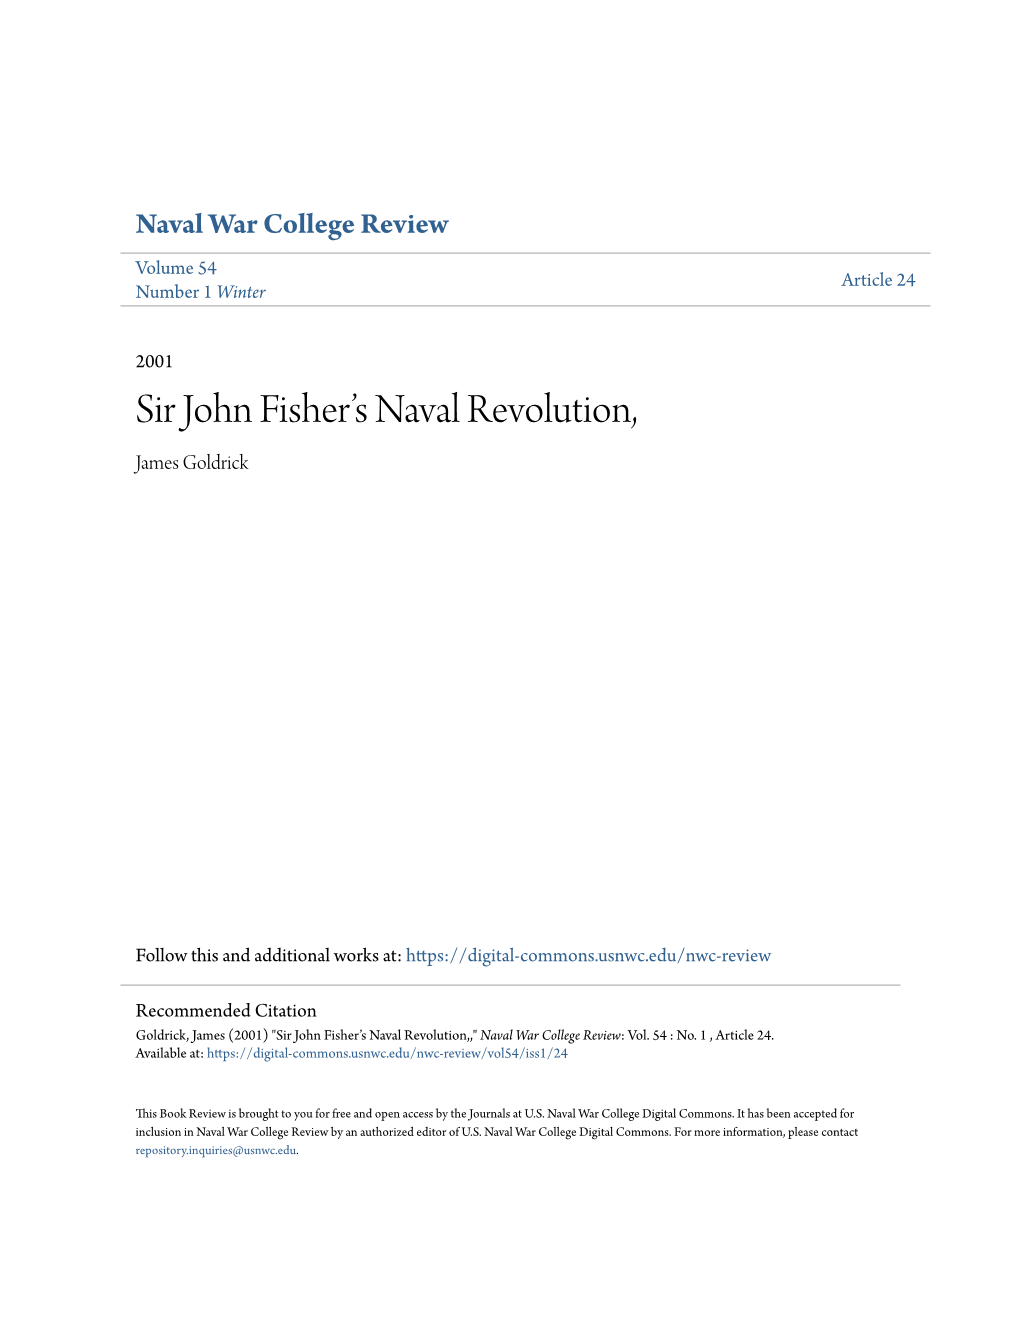 Sir John Fisher's Naval Revolution